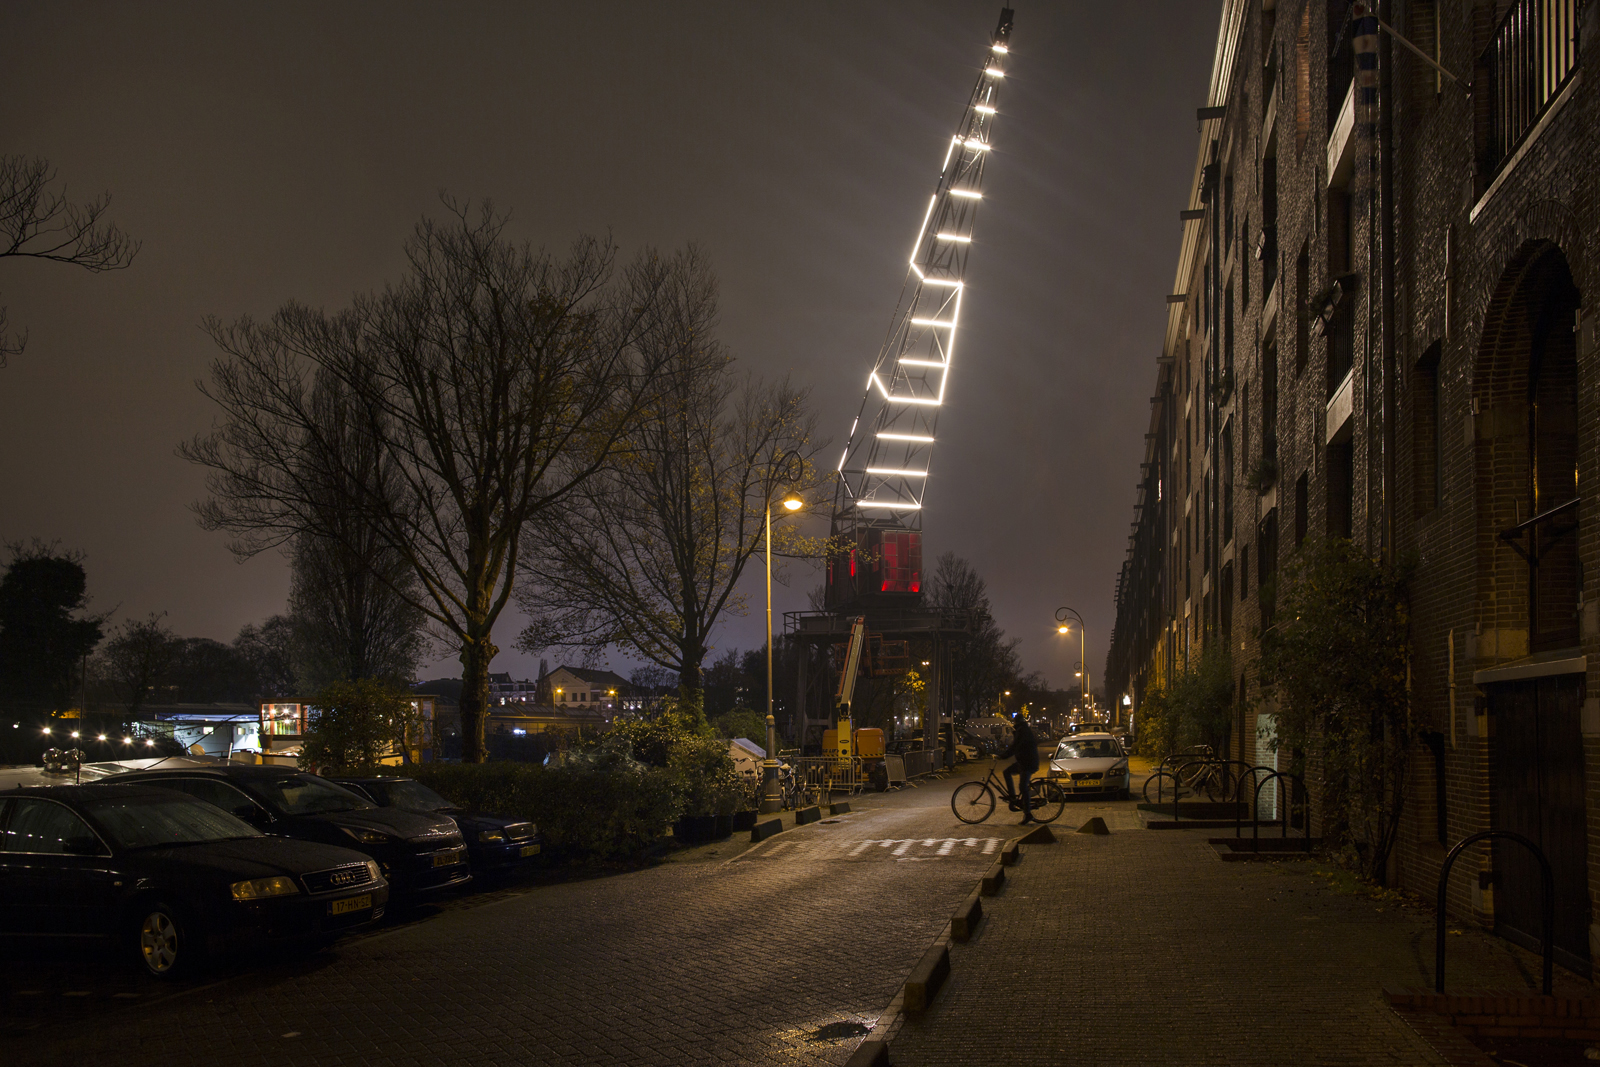 Between the lines by Har Hollands - Amsterdam Light Festival 2019 - Photo Copyright Janus van den Eijnden (1)